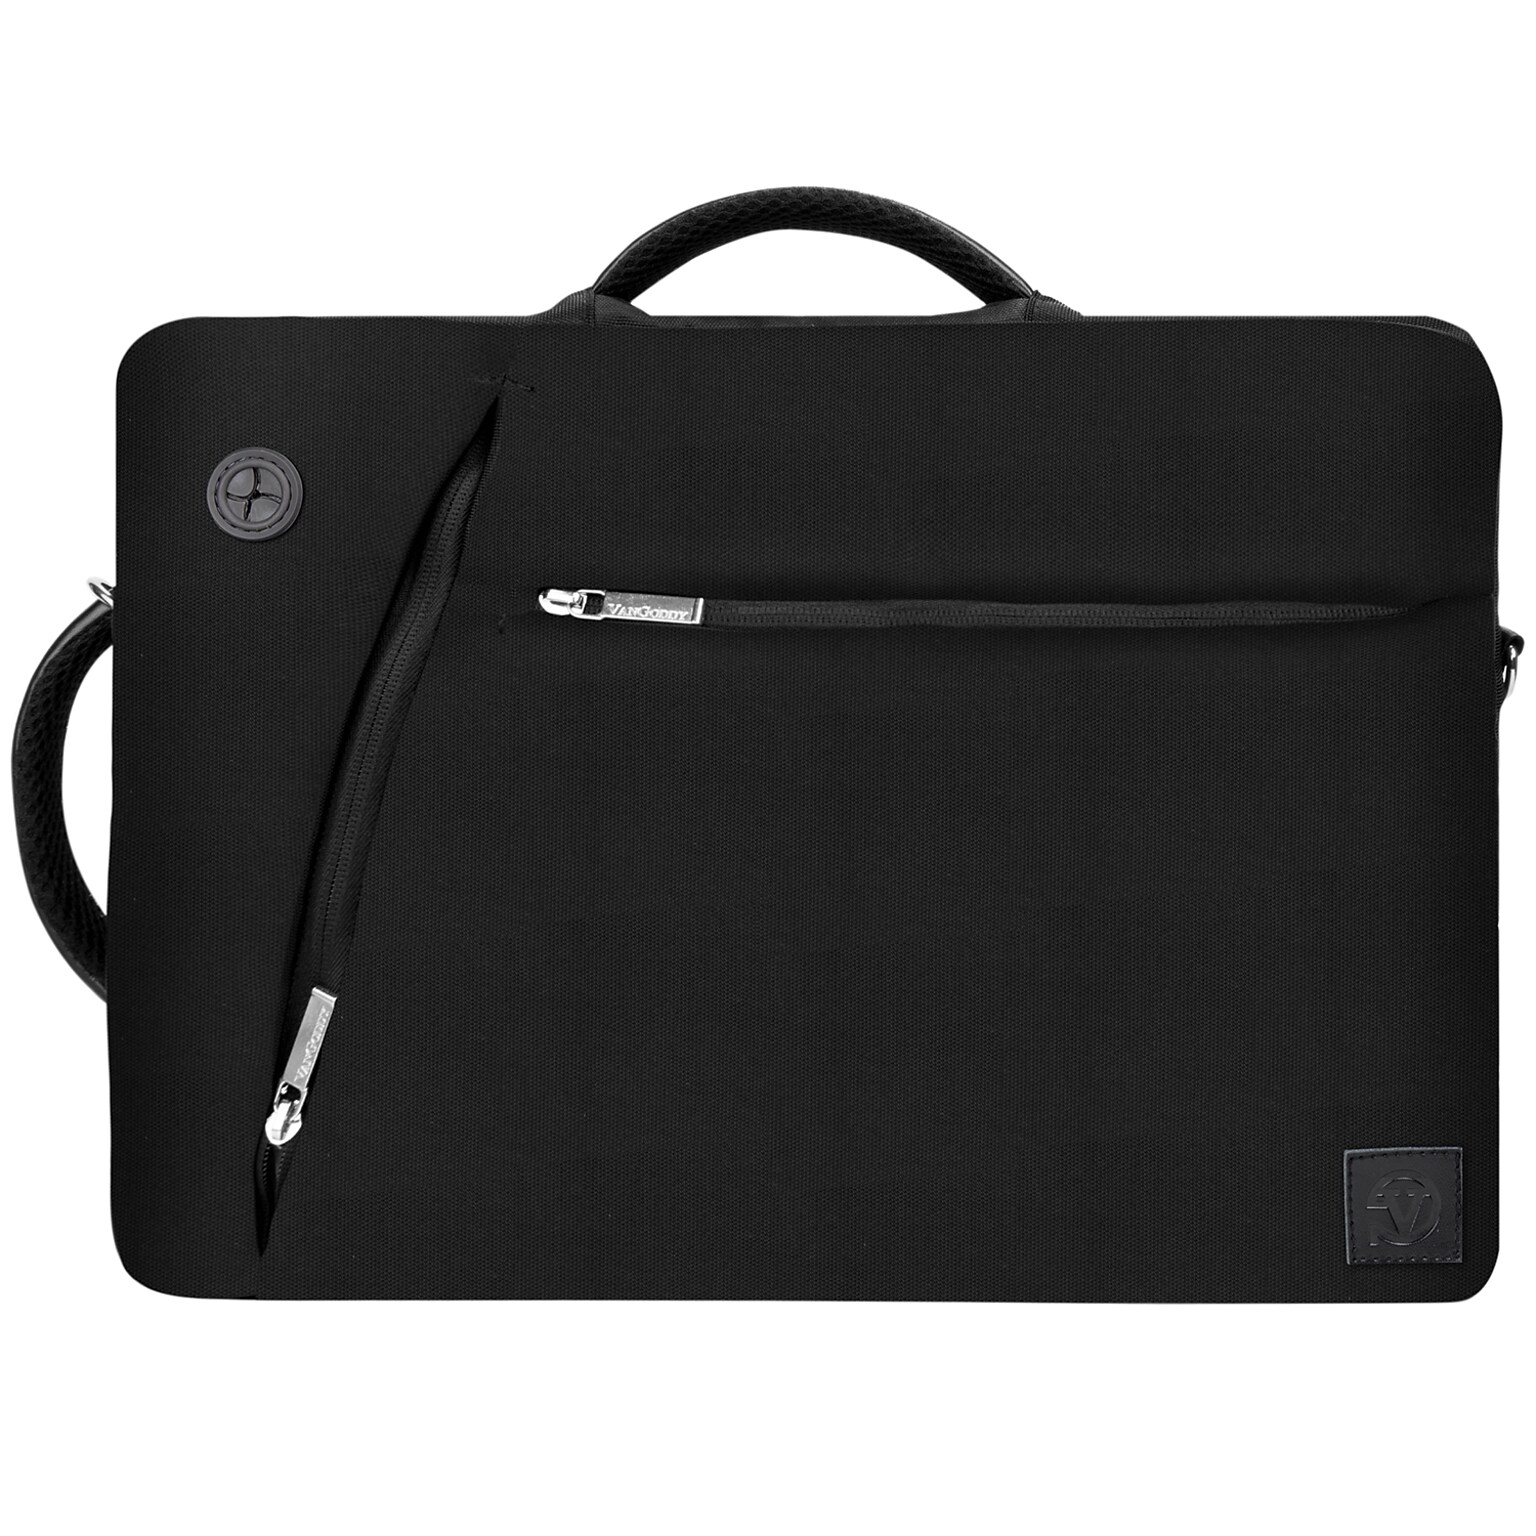 Vangoddy Laptop Messenger, Black Nylon (LAPLEA023)